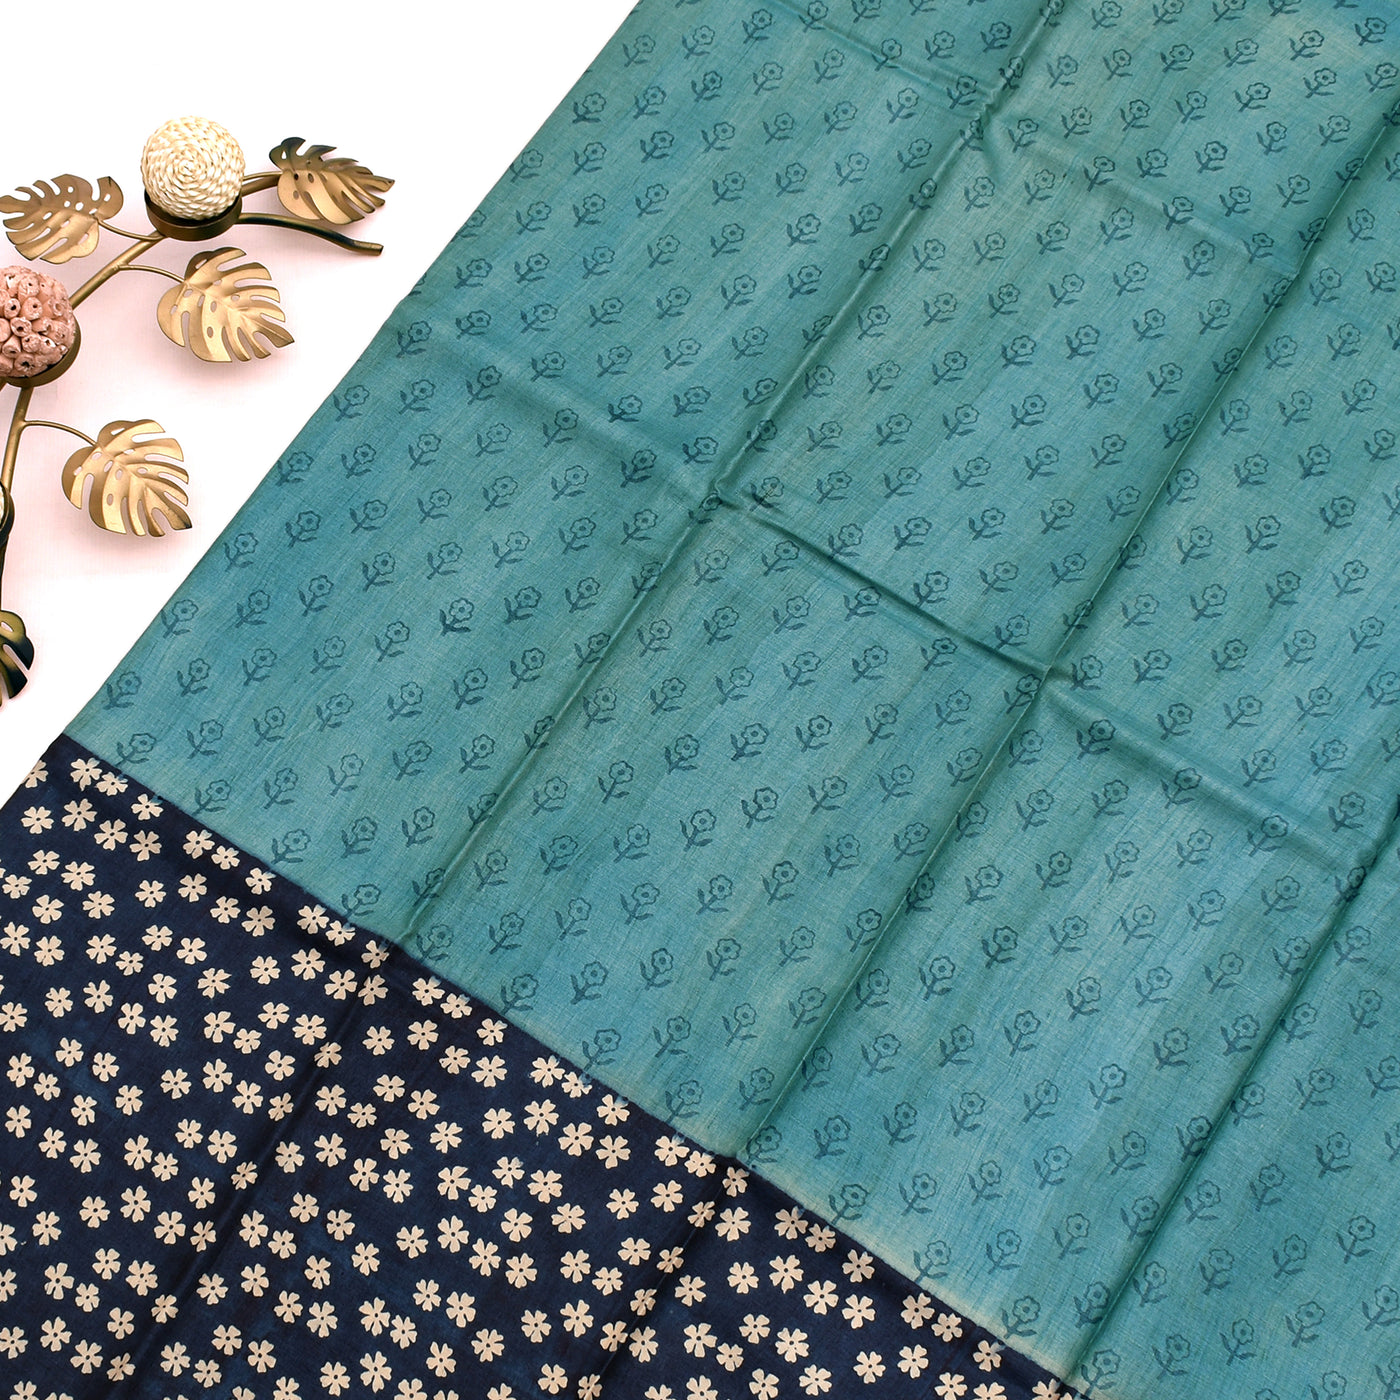 Blue Tussar Silk Saree with Small Flower Printed Design